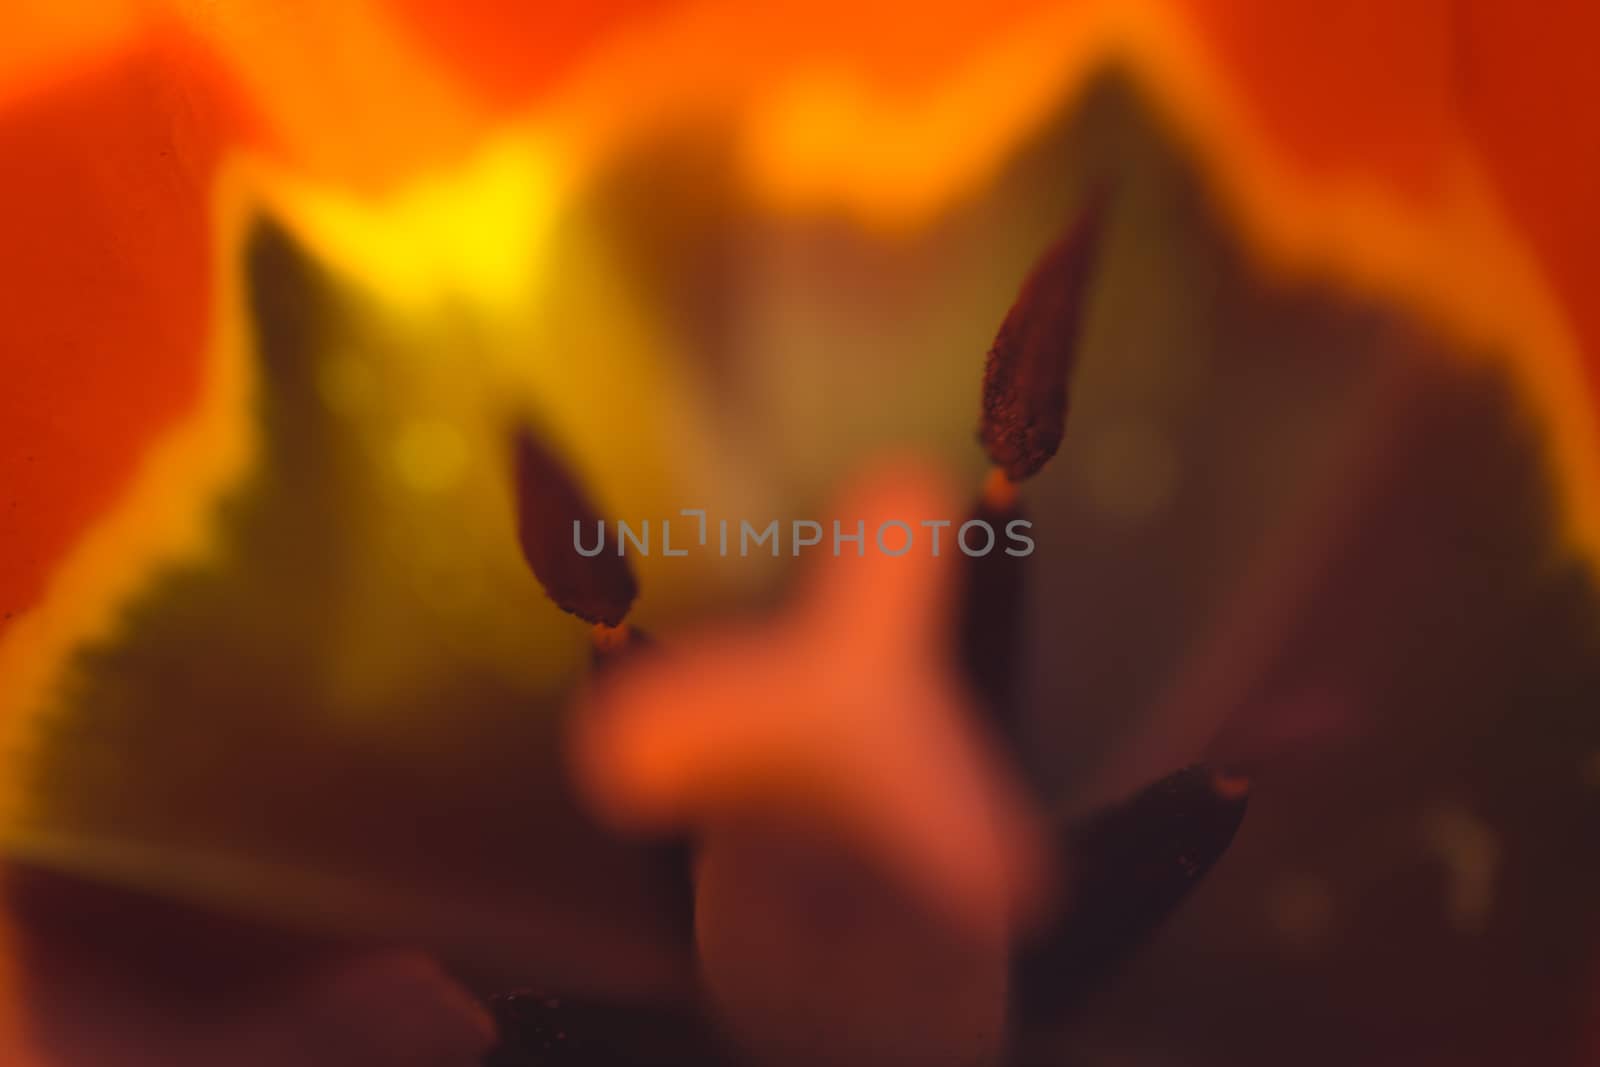 Abstract tulip macro shot by tadeush89